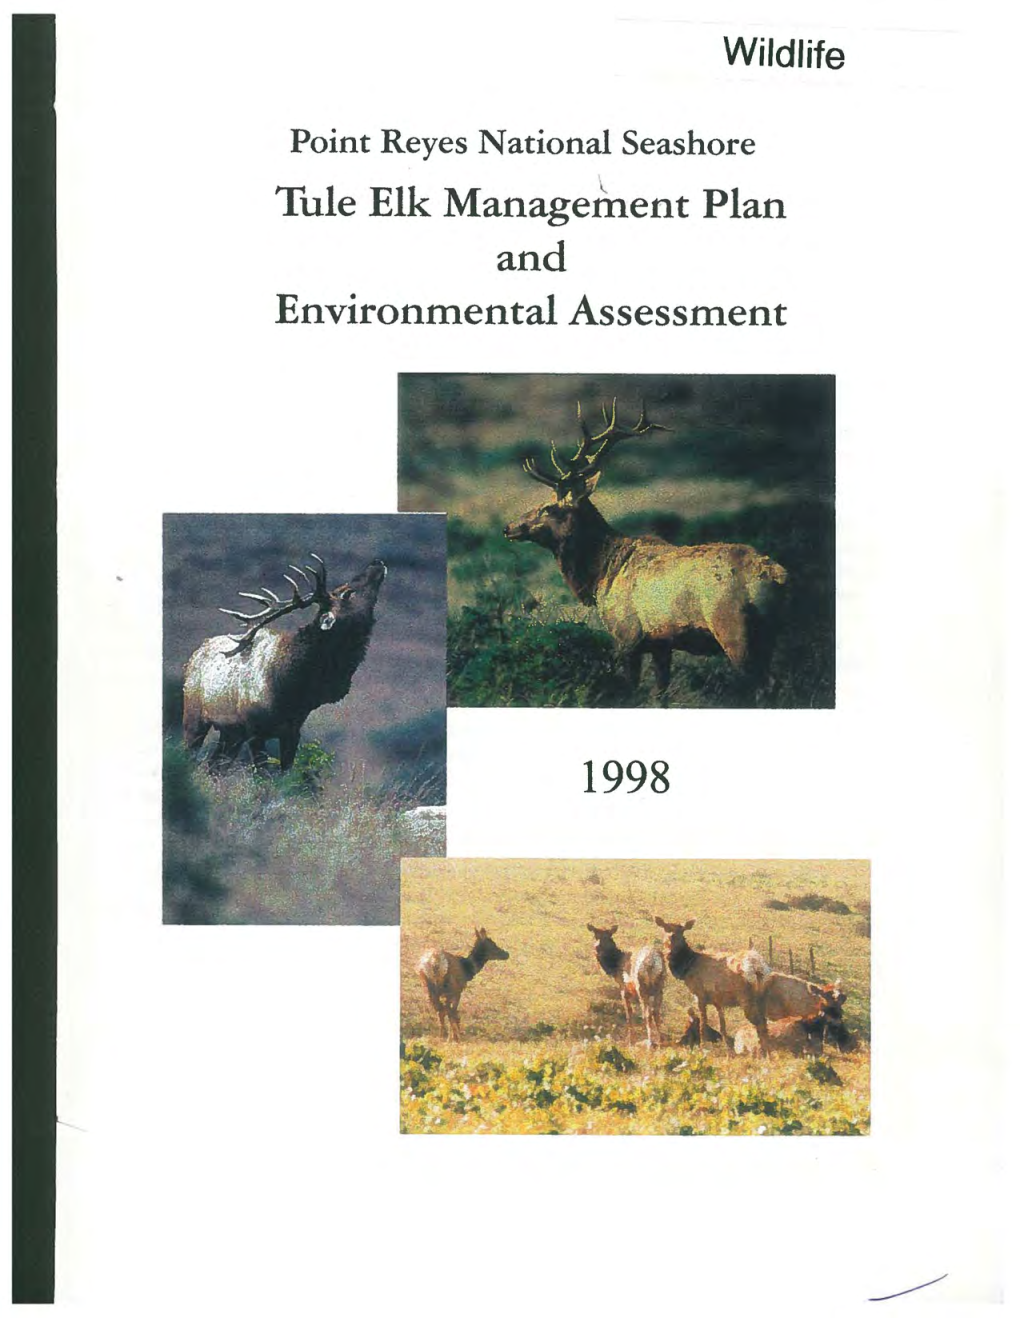 1998 Tule Elk Management Plan and Environmental Assessment